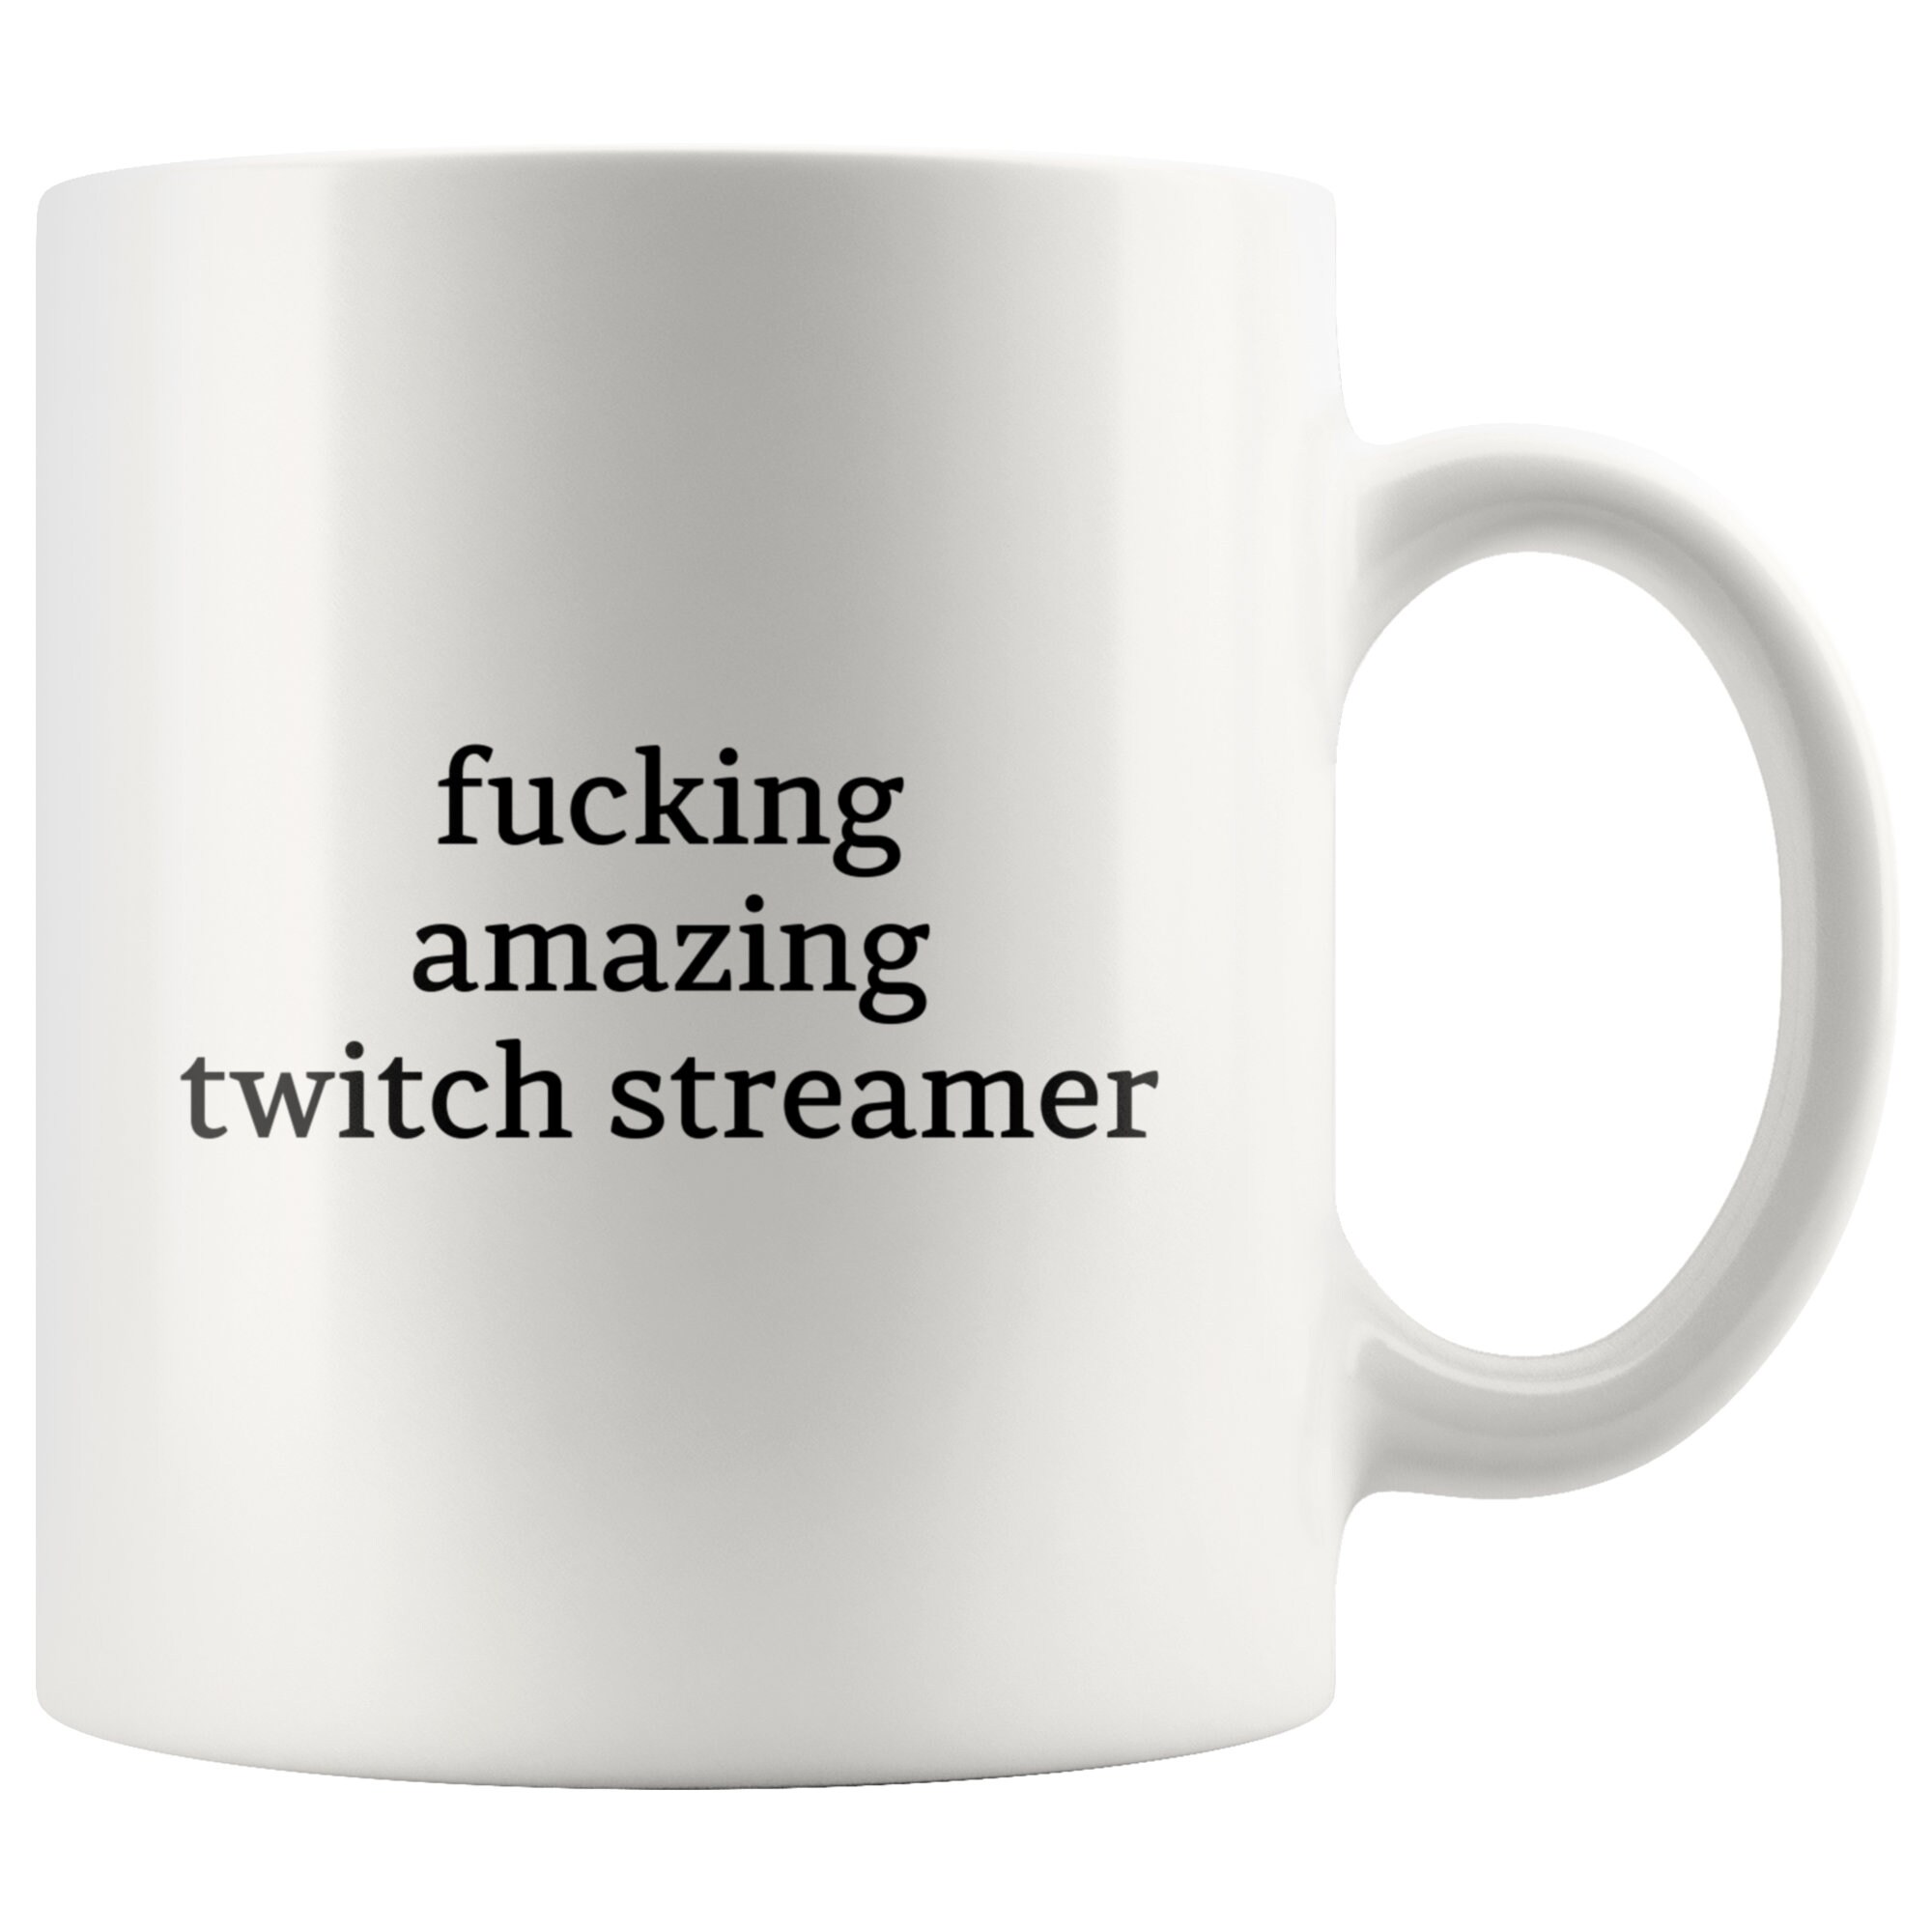 Mug for Twitch Streamer Fucking Amazing Twitch Streamer Mug Gift for Twitch Streamer Twitch Streamer Birthday Mug